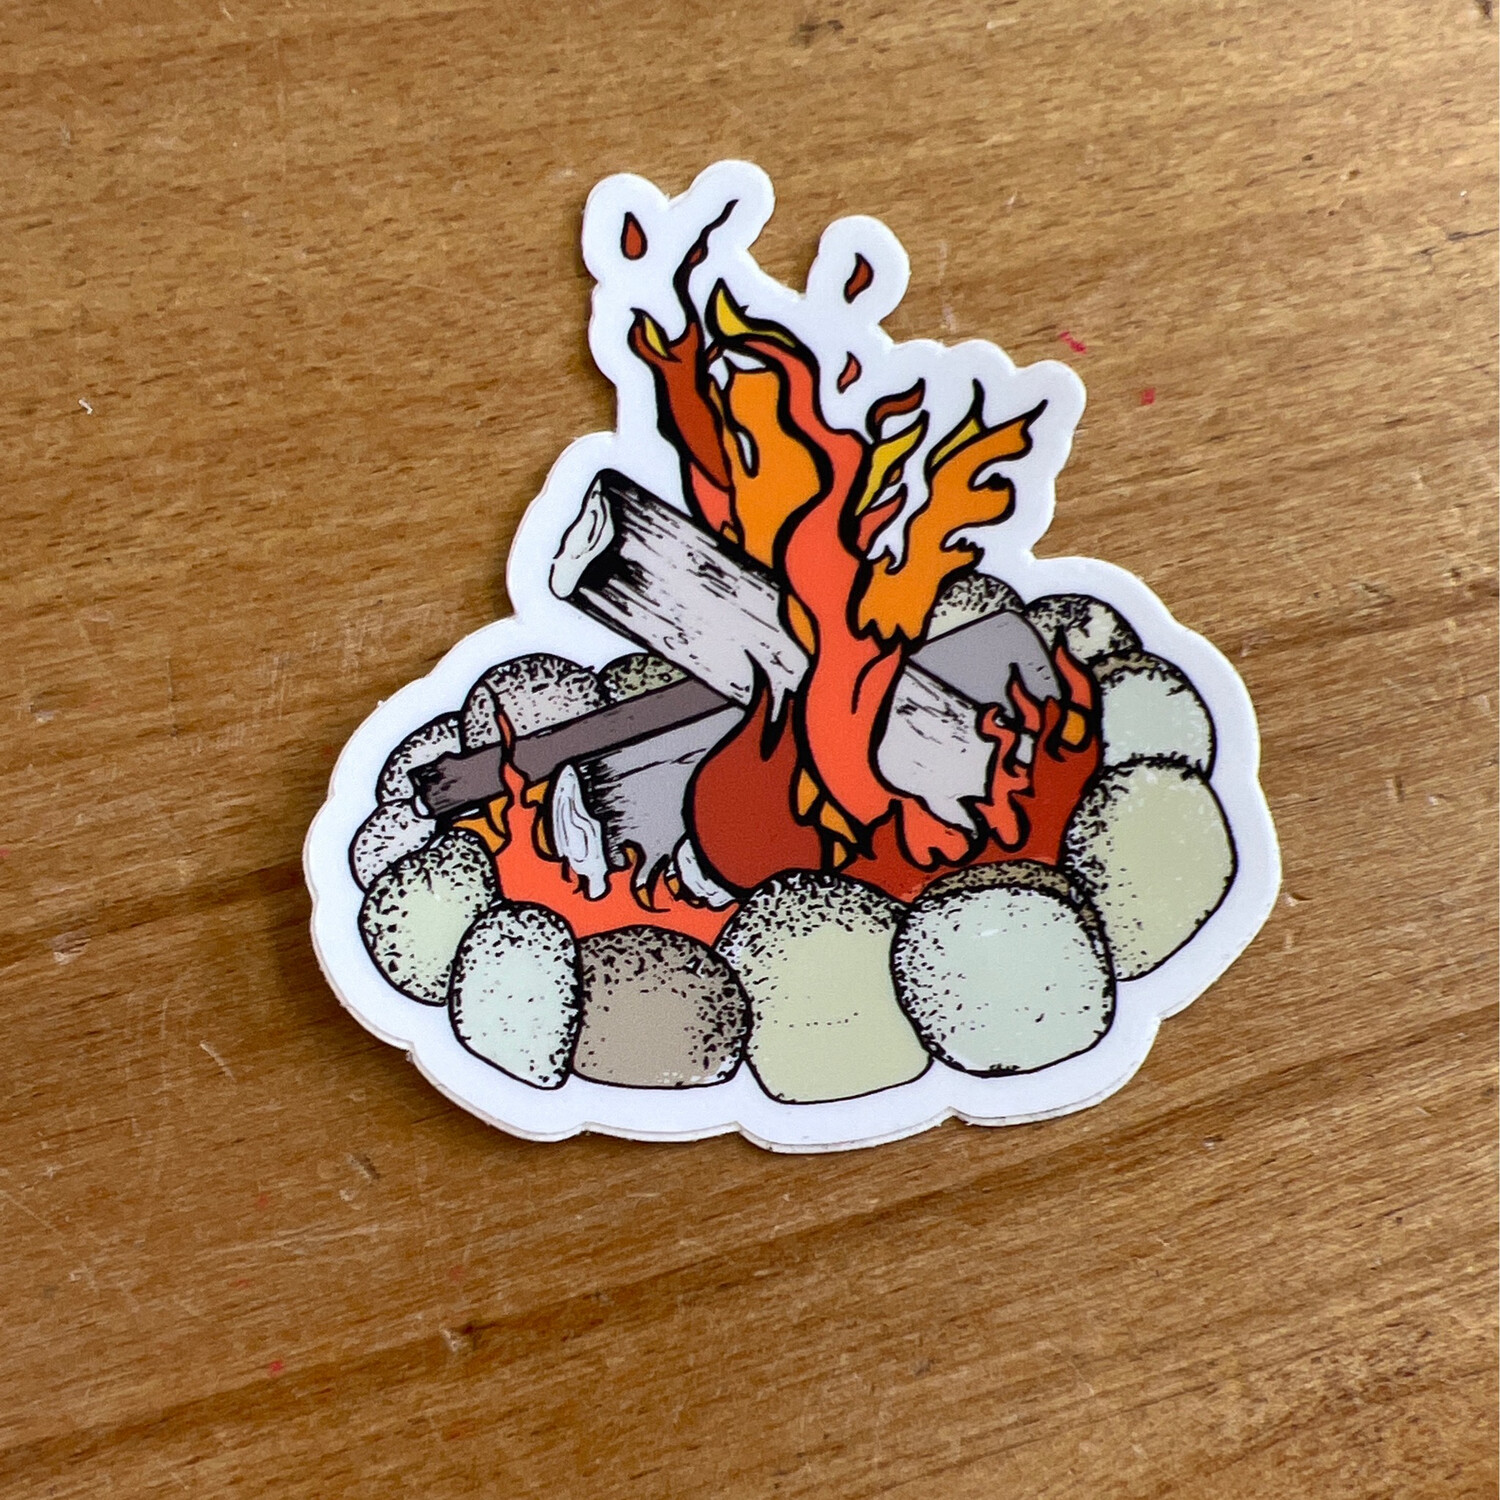 Bonfire Sticker